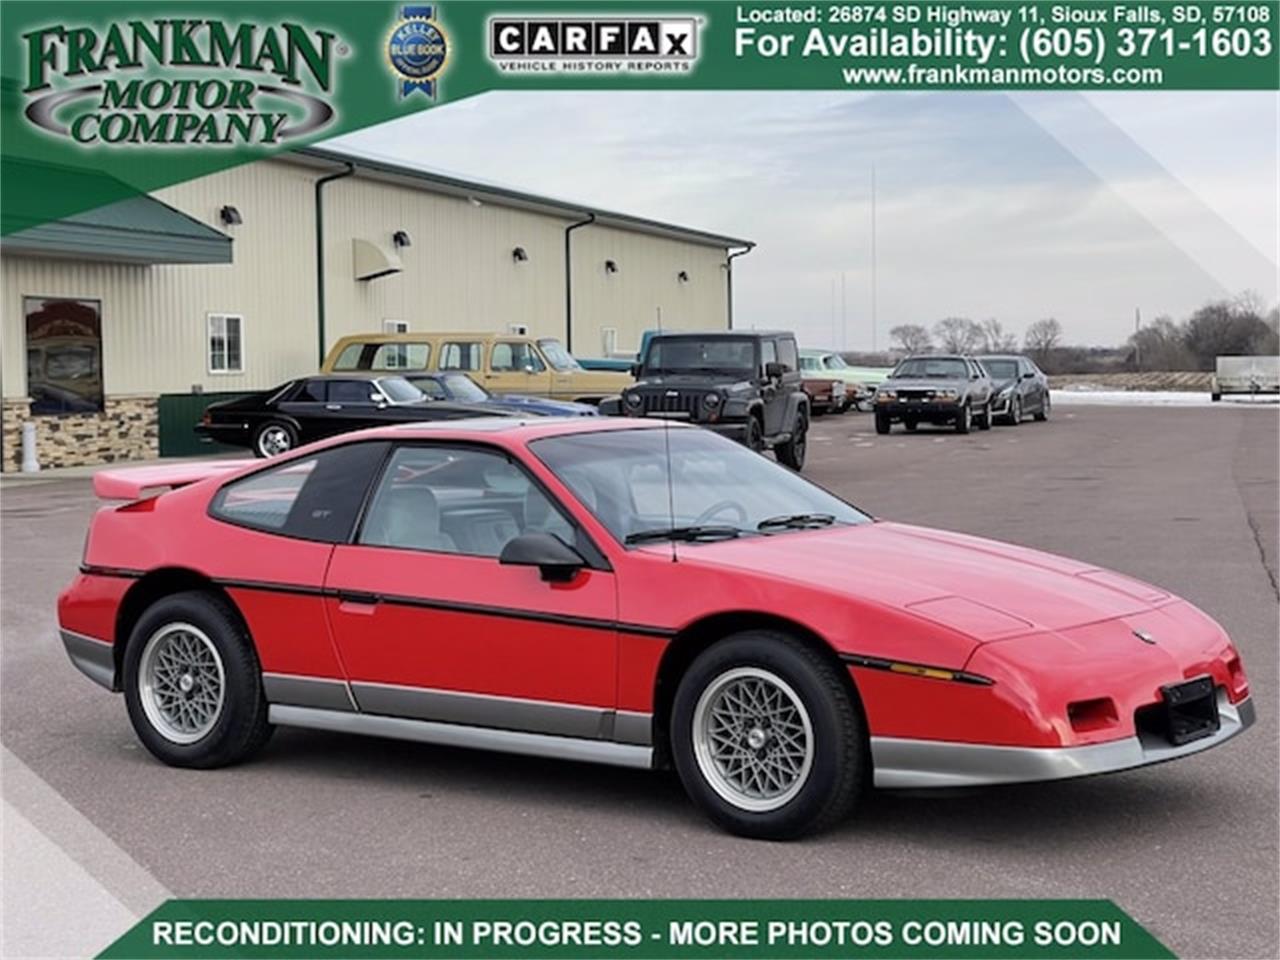 1986 Pontiac Fiero for sale in Sioux Falls, SD